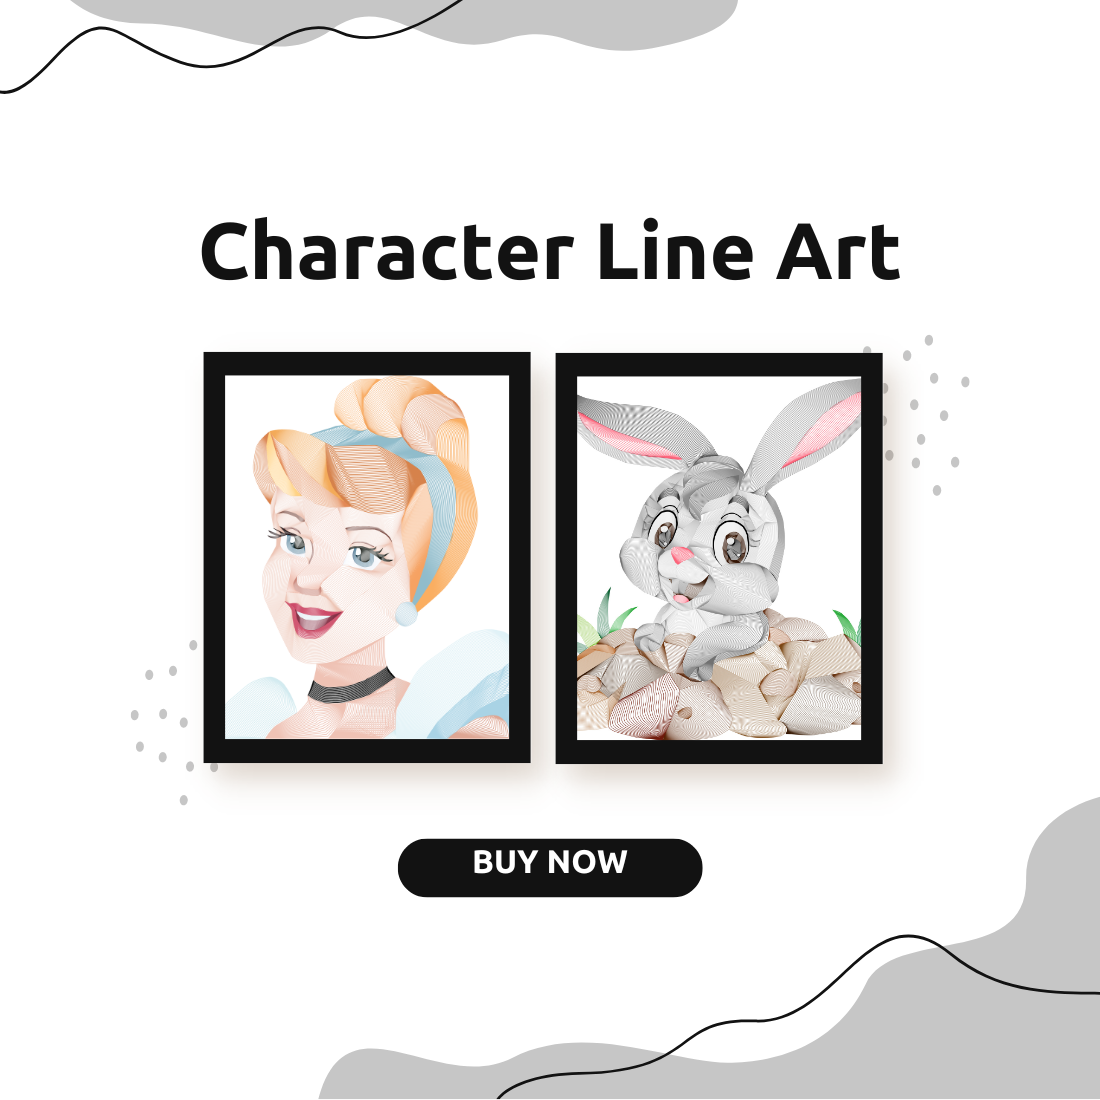 2 Character Line Art Bundle preview image.